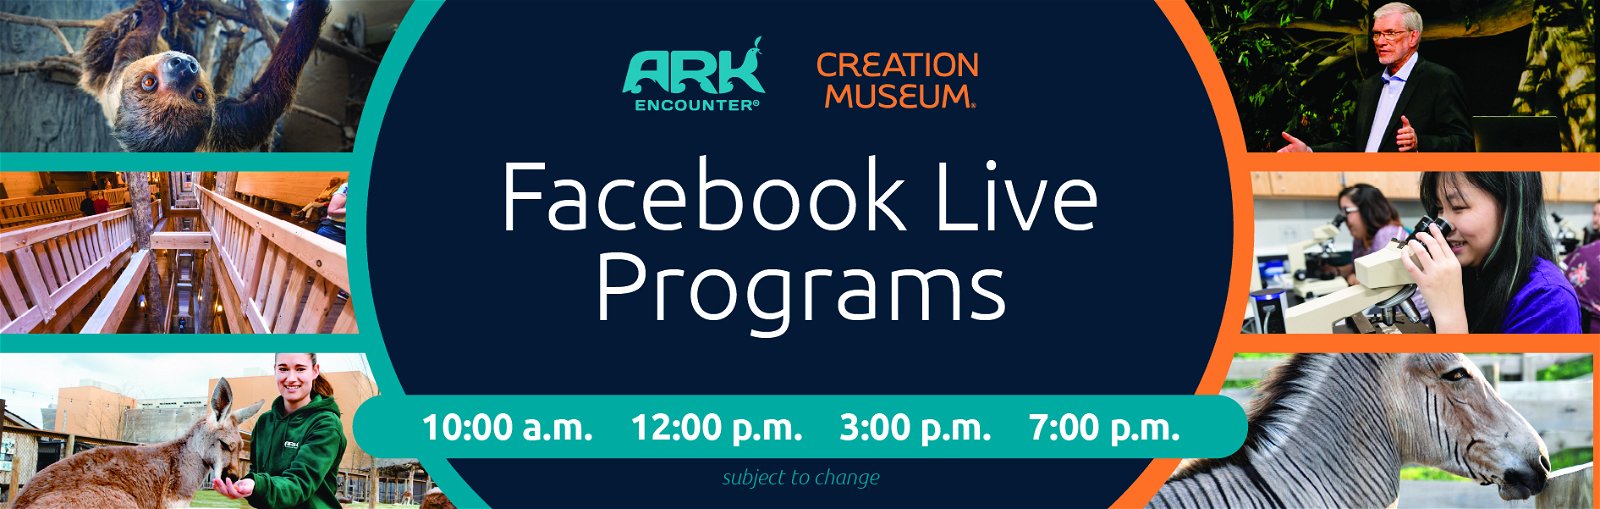 Facebook Live Programs